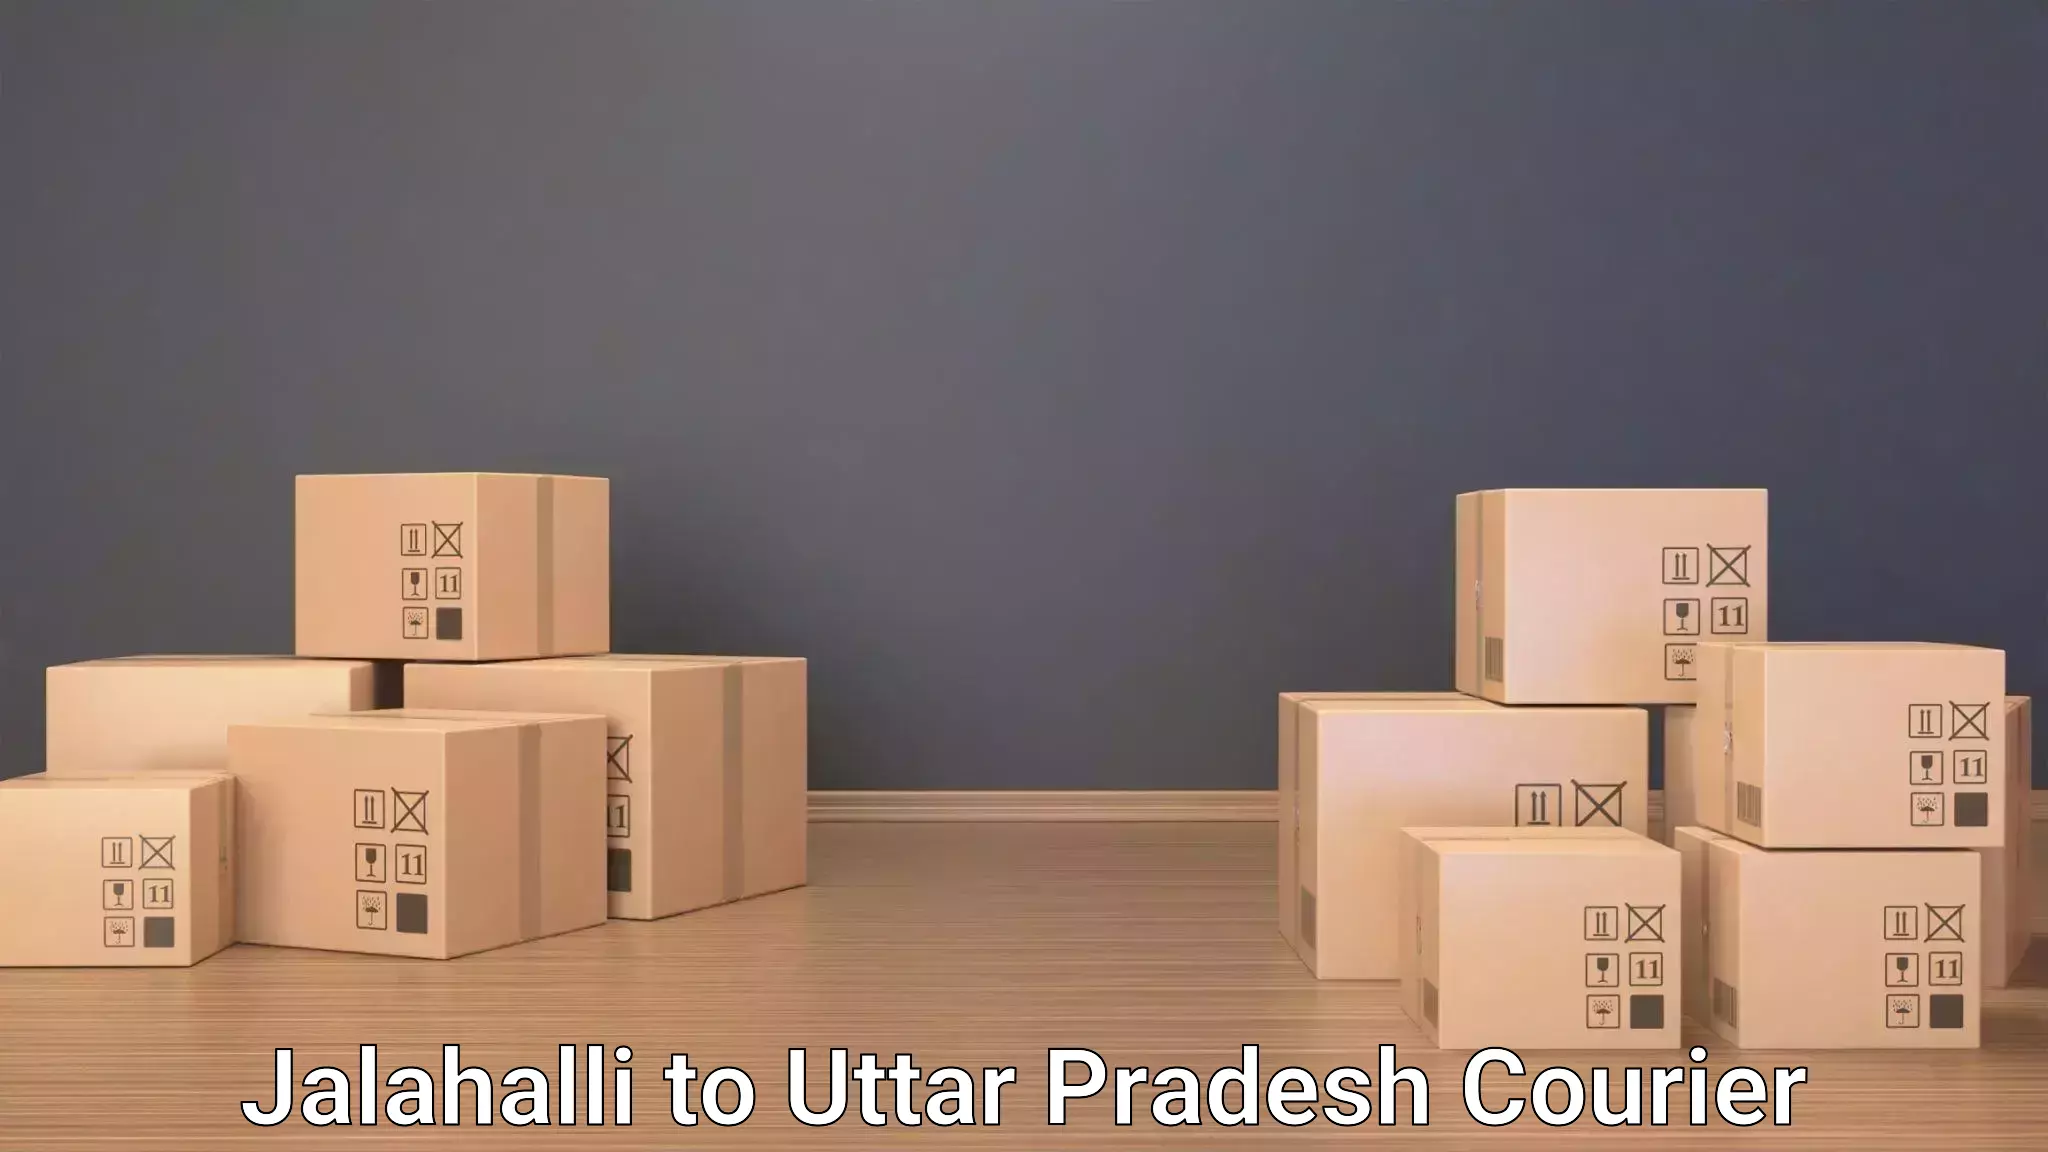 Luggage delivery optimization Jalahalli to Aligarh Muslim University